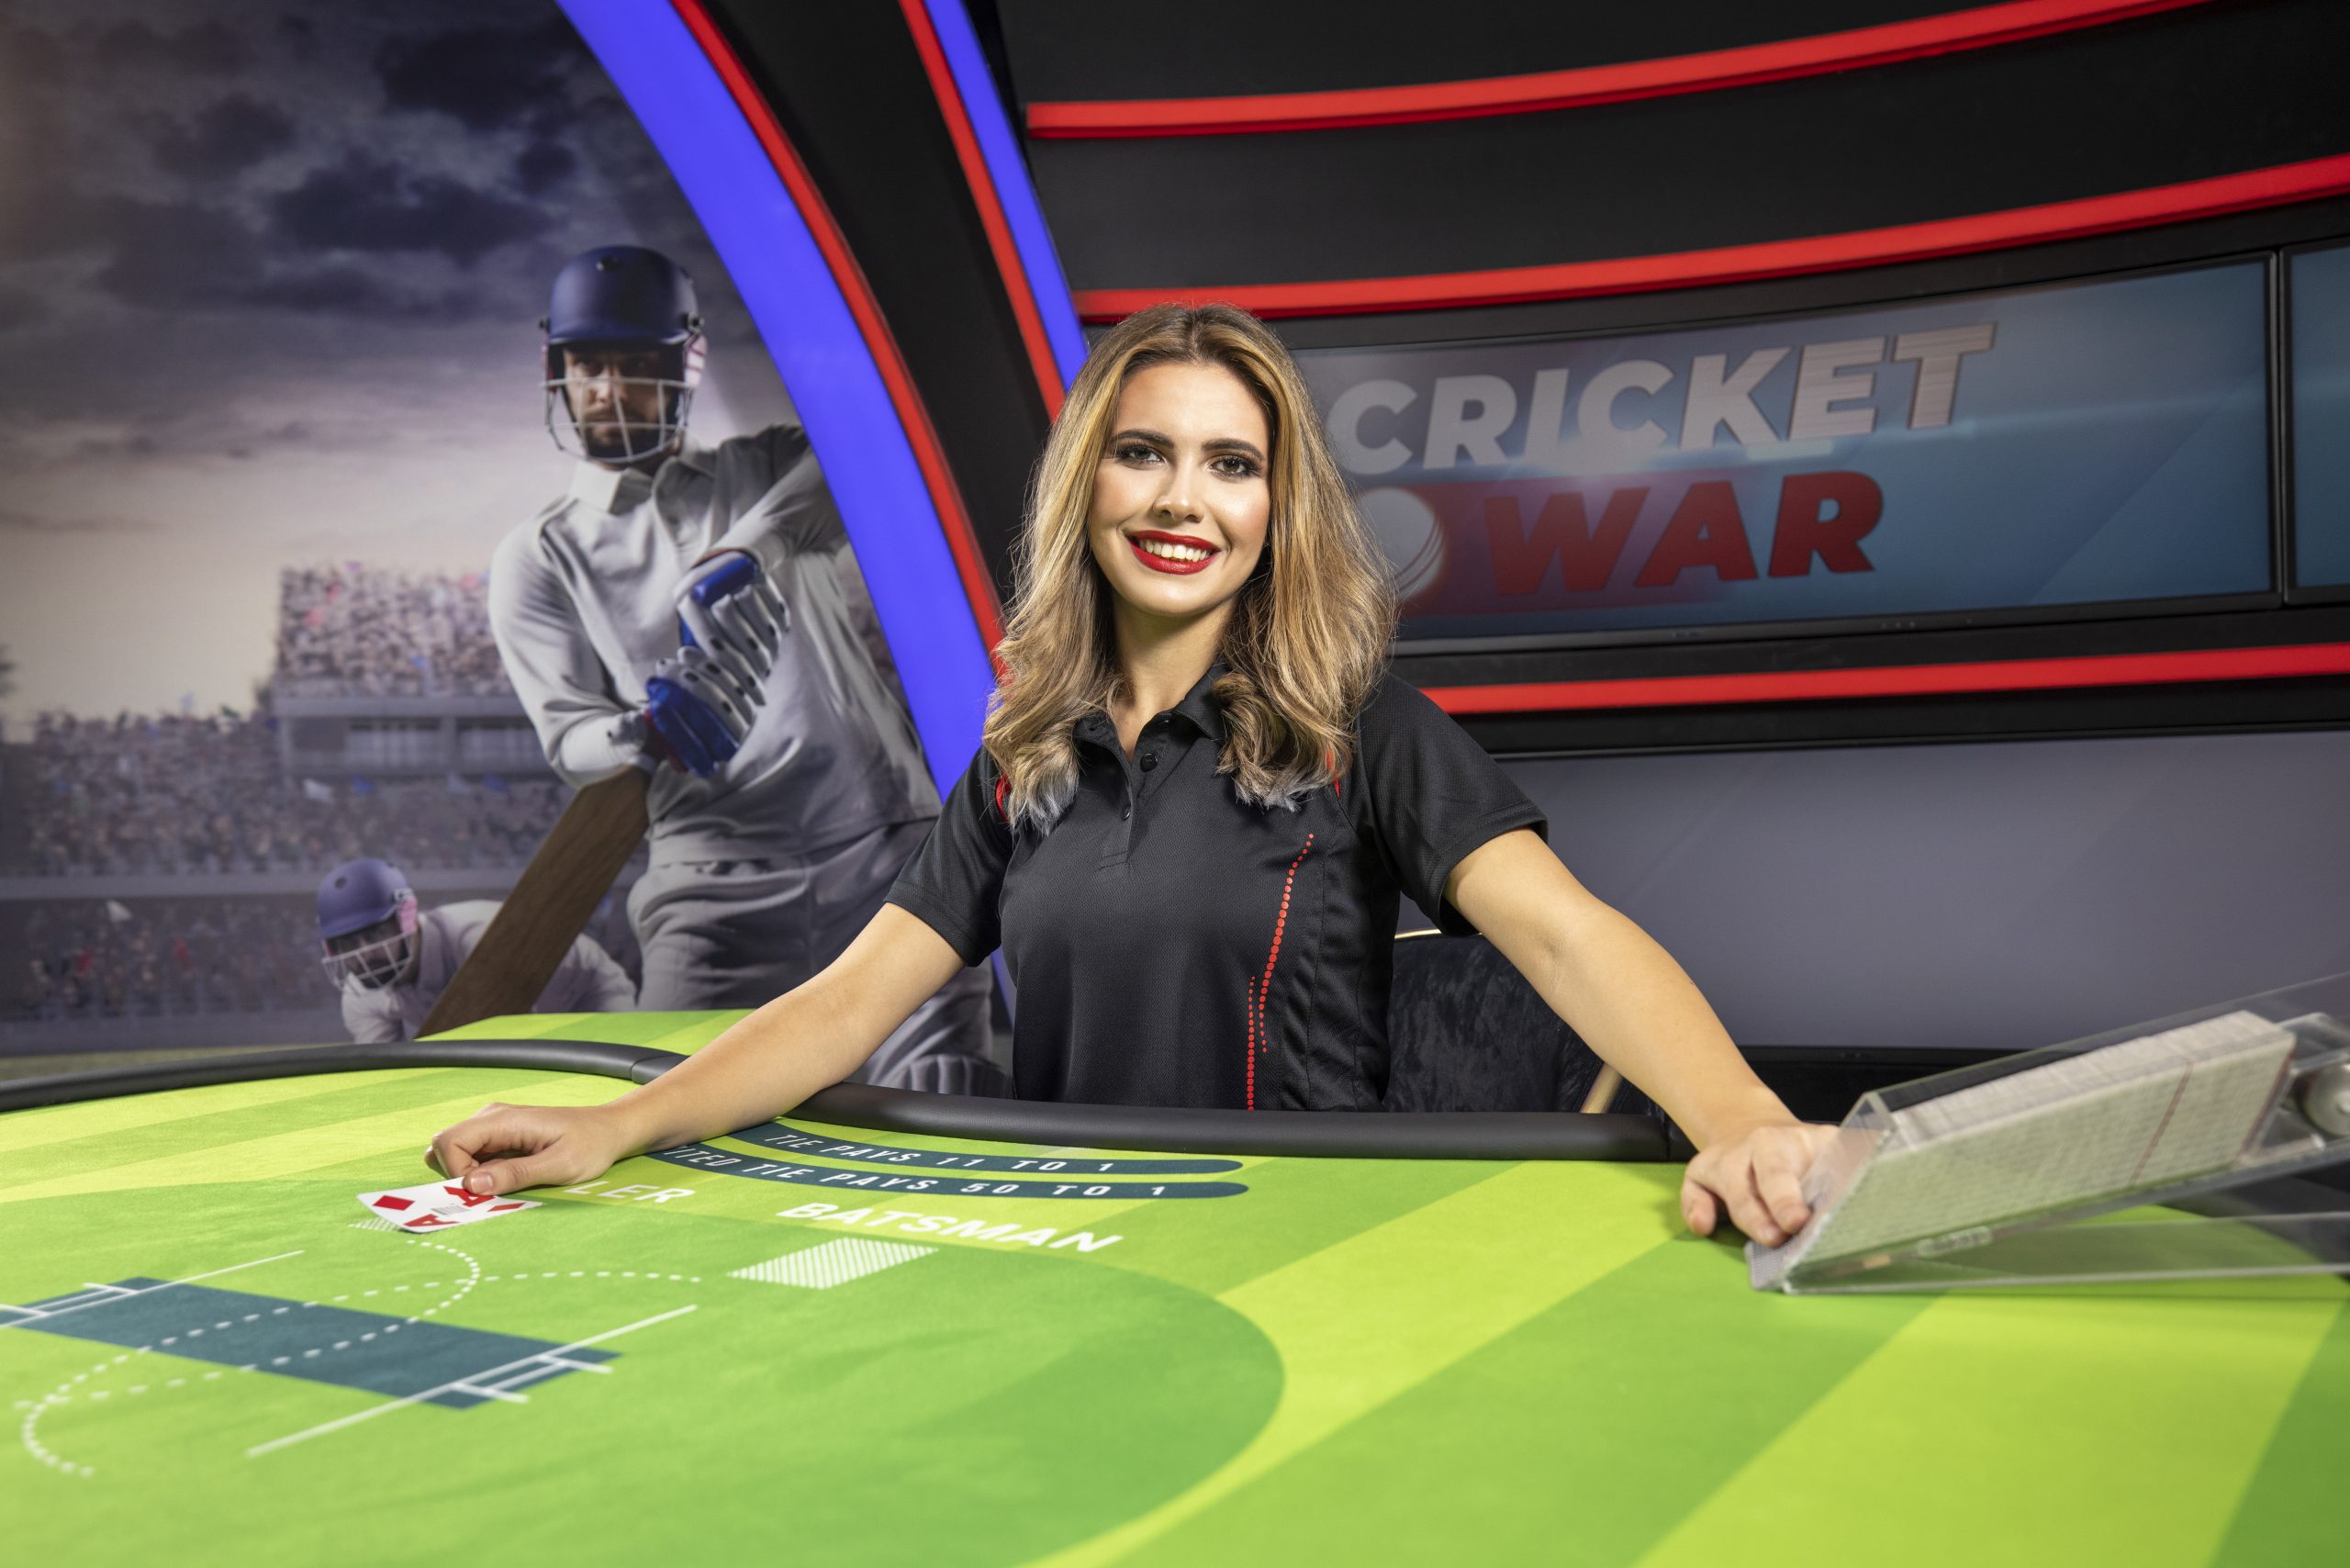 cricket_war_image_2021_11_2.jpg thumbnail